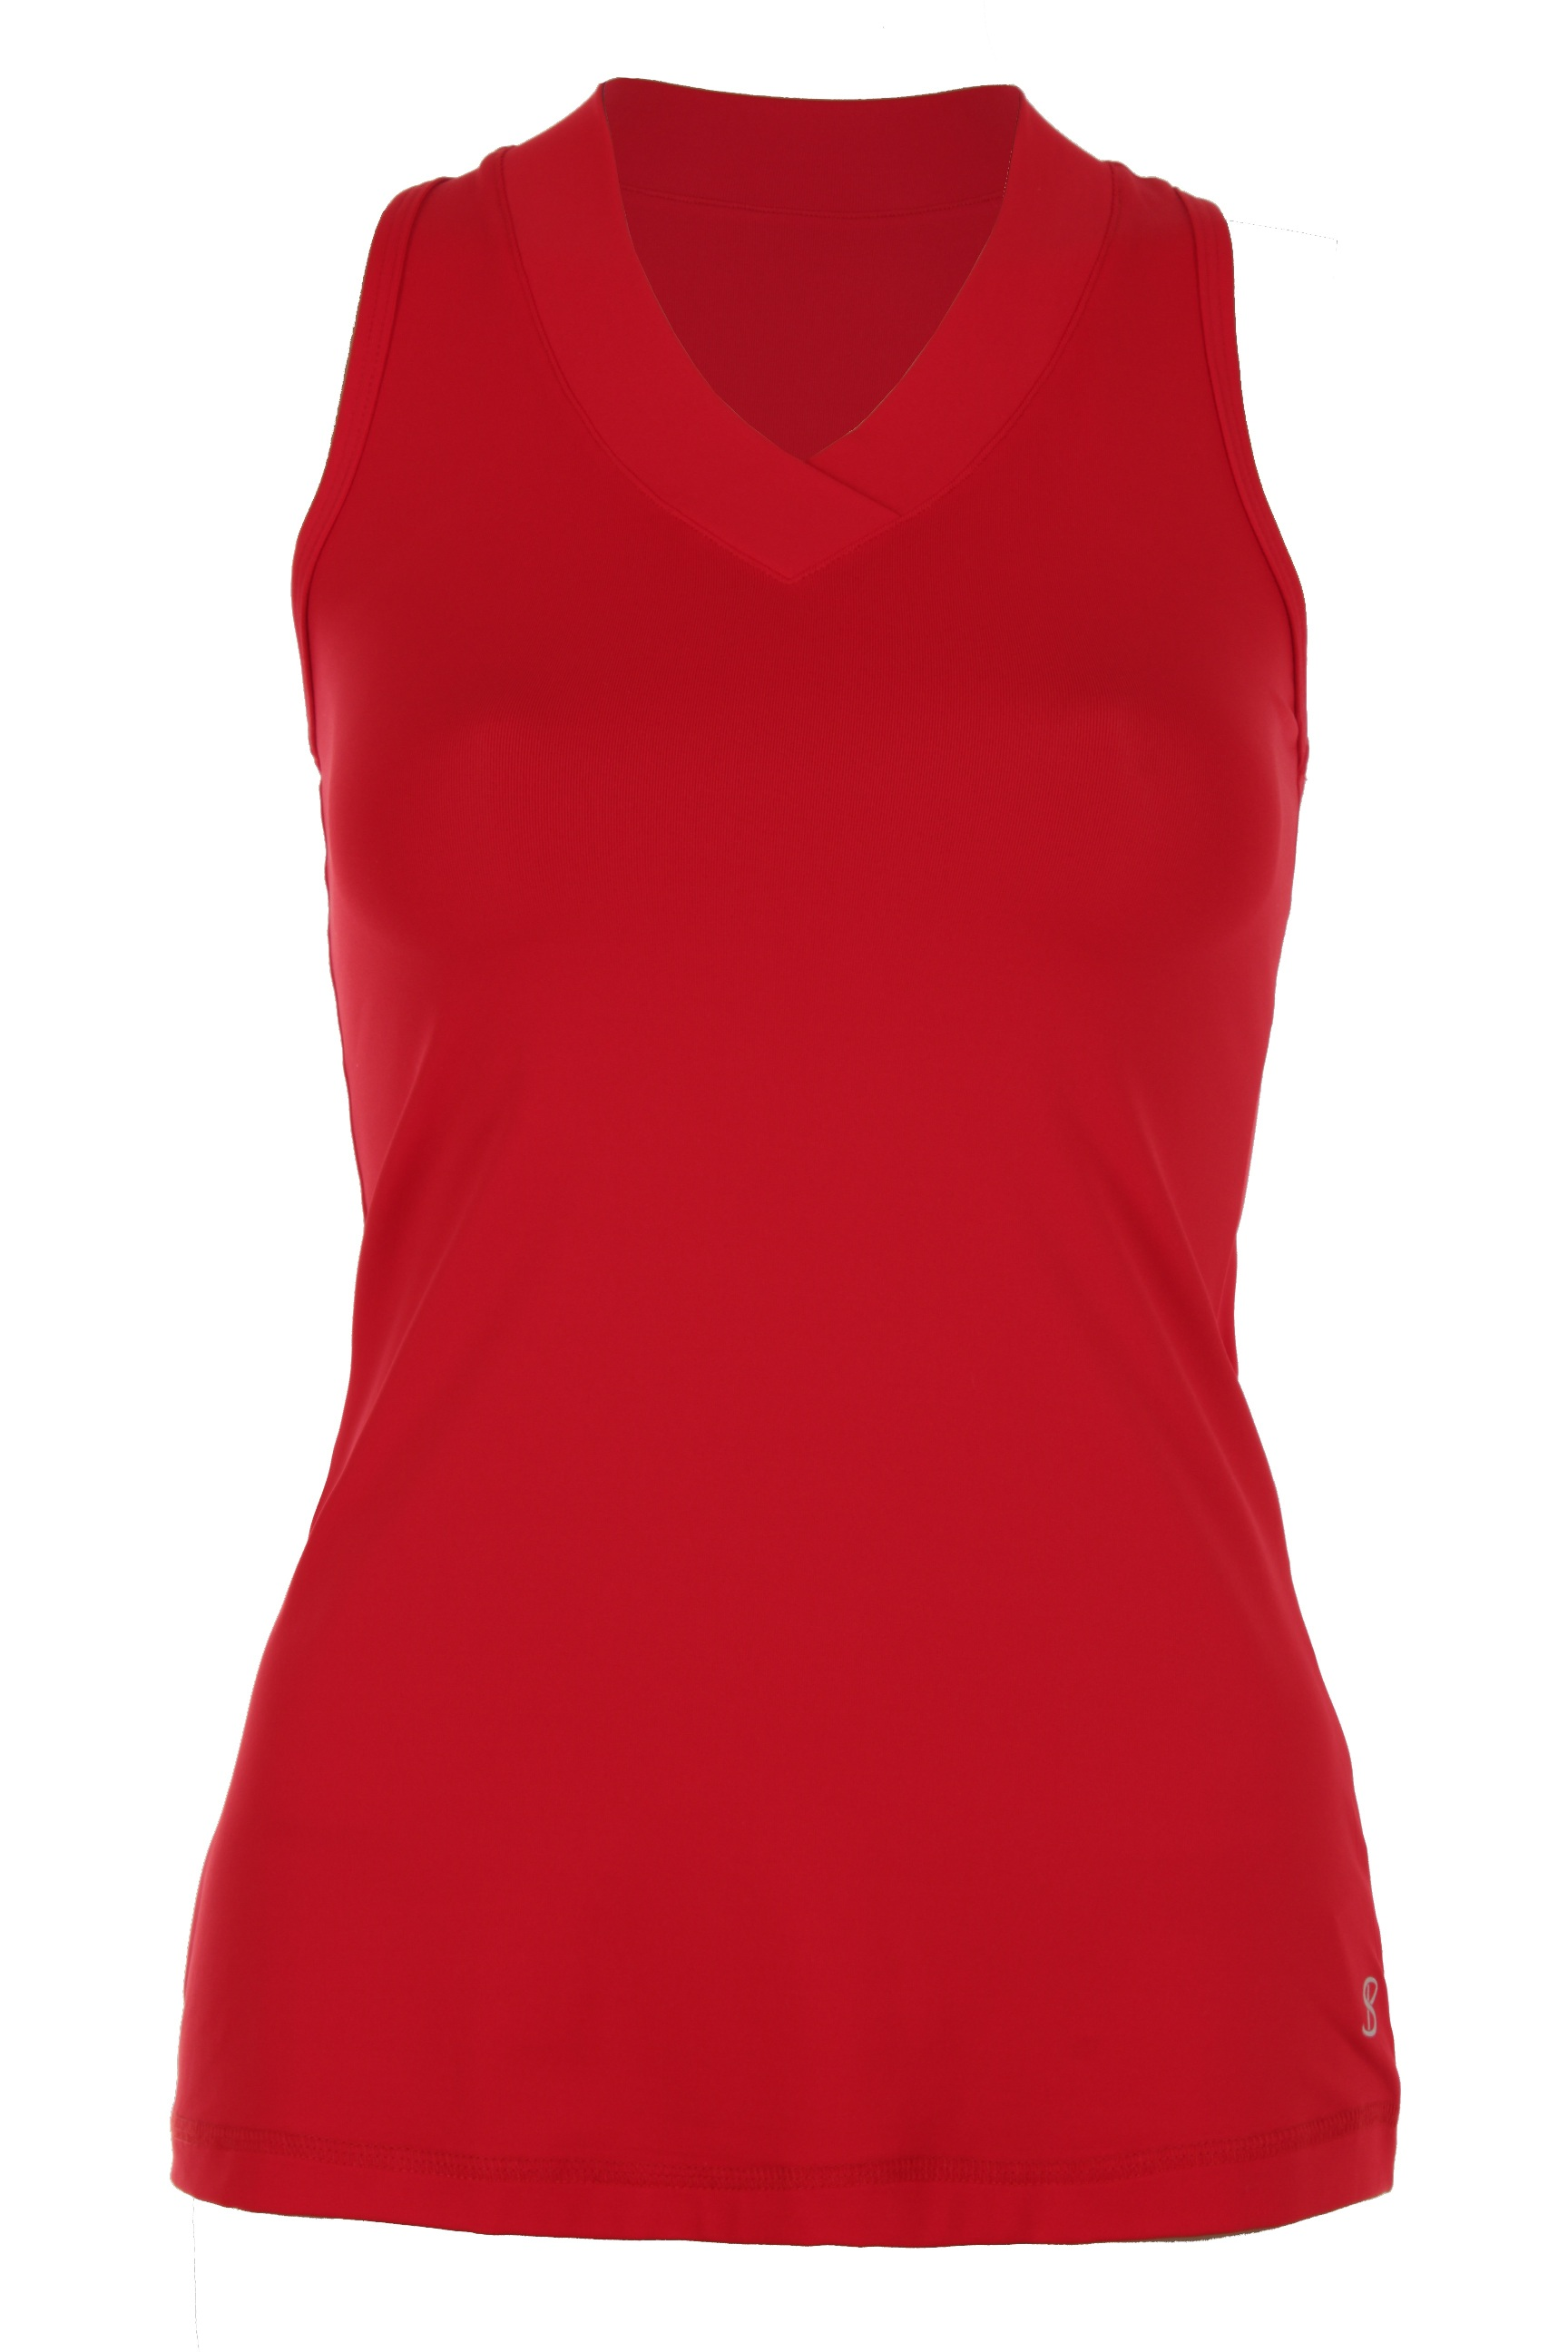 Sofibella Women&amp;apos;s Athletic Racerback Tennis Top (Red)